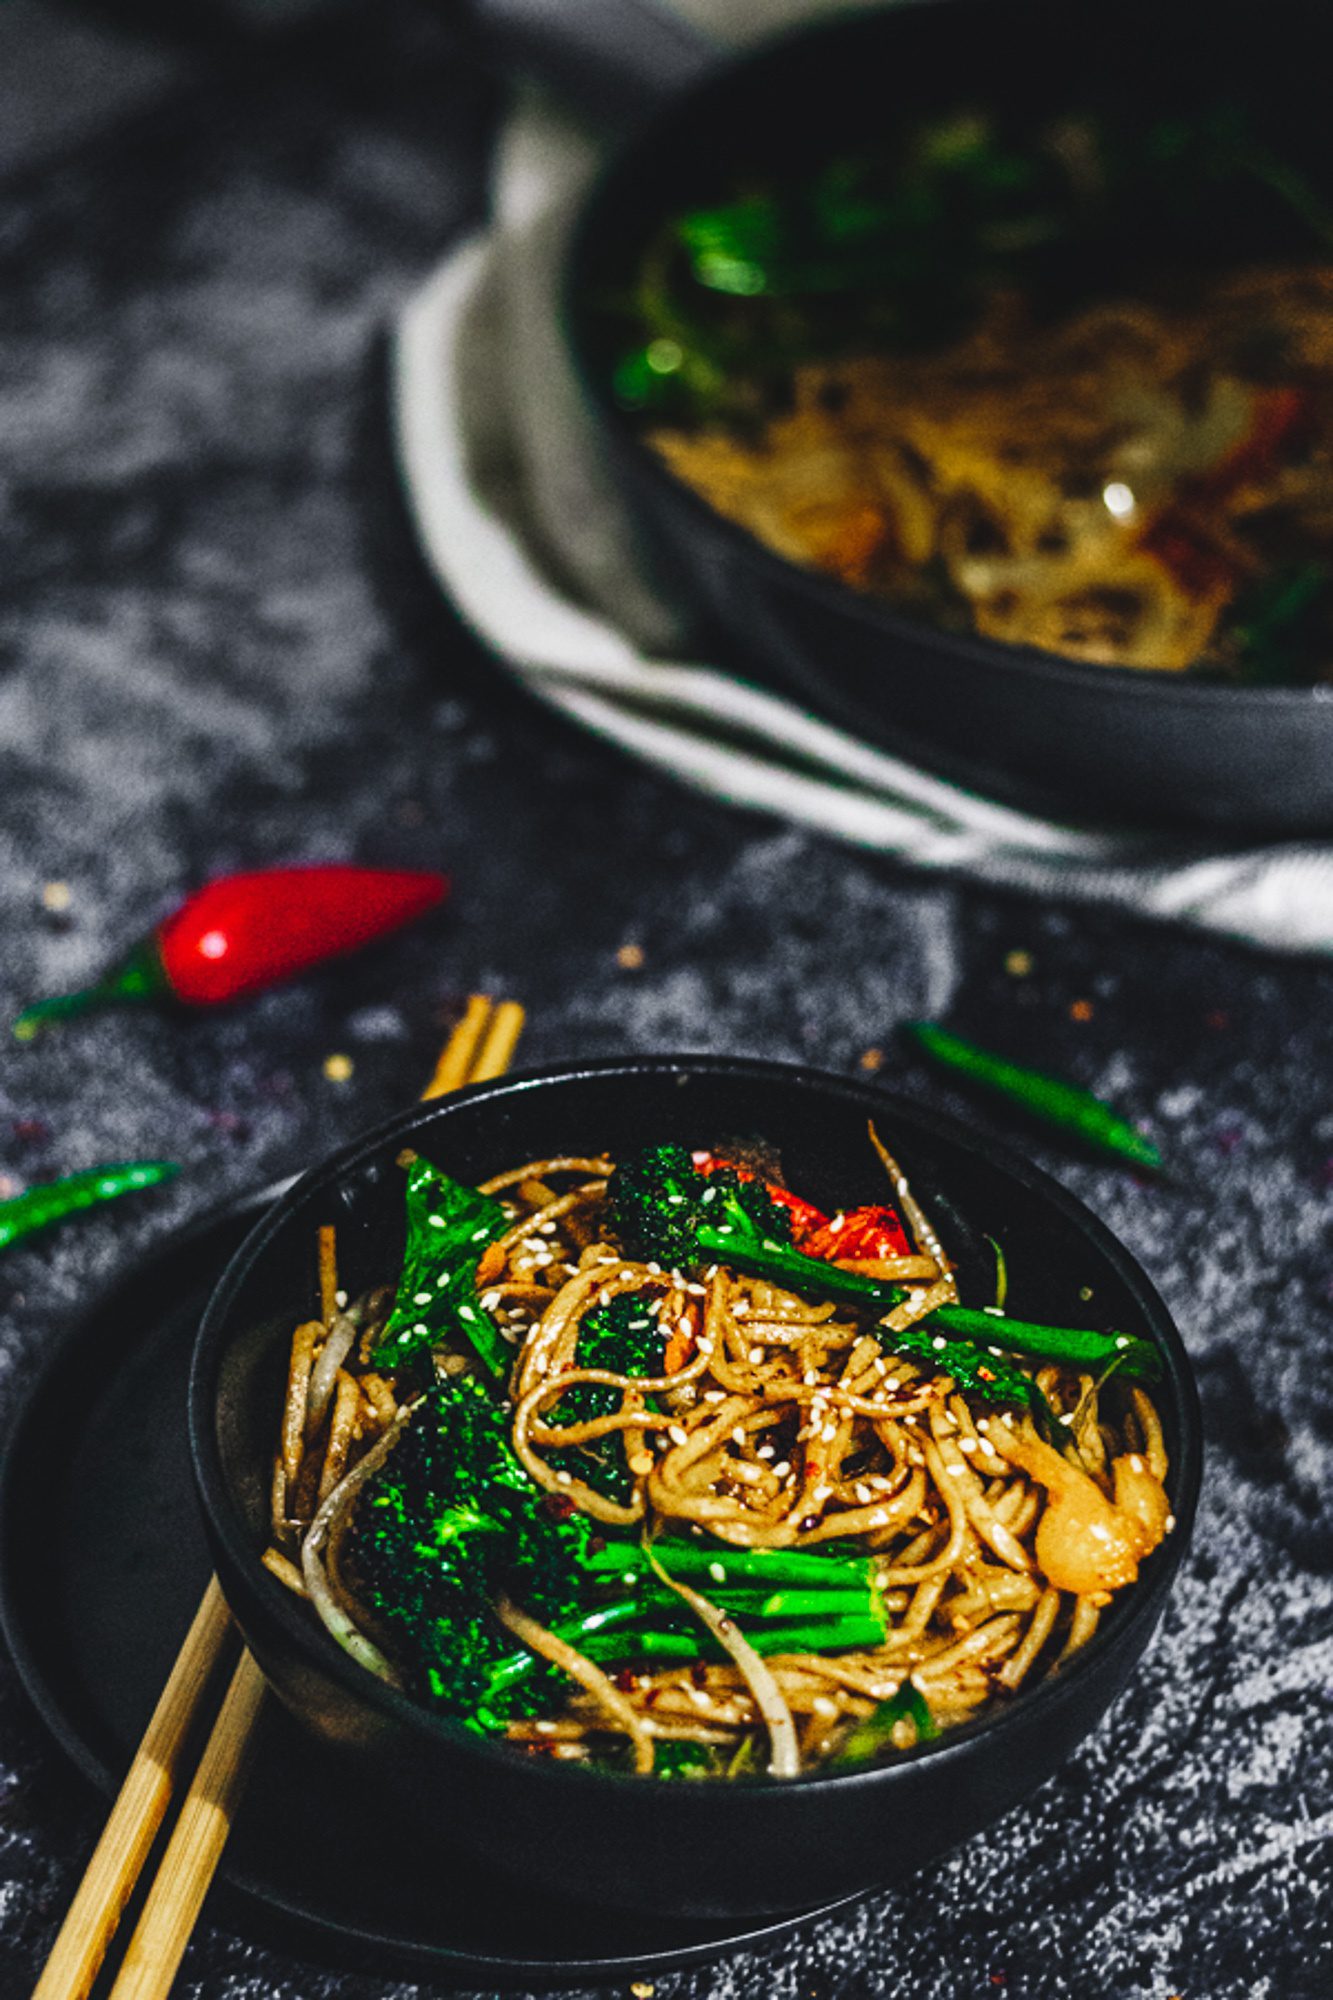 Vegan stir-fry noodles with broccoli - LIVHUWANI Vegan stir-fry noodles